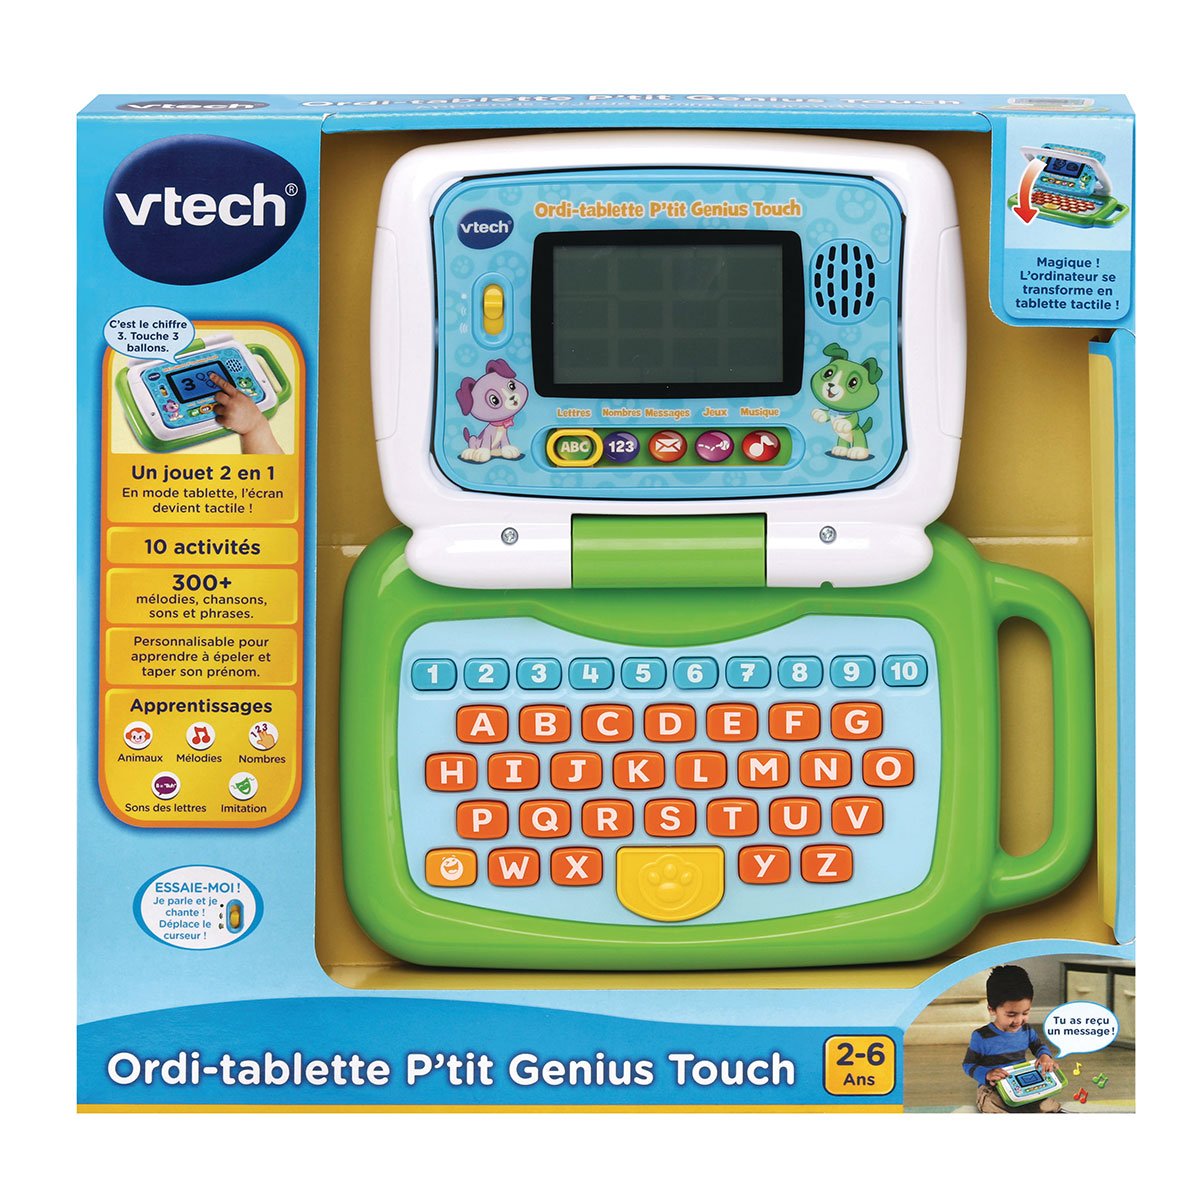 Vtech ordinateur - VTech